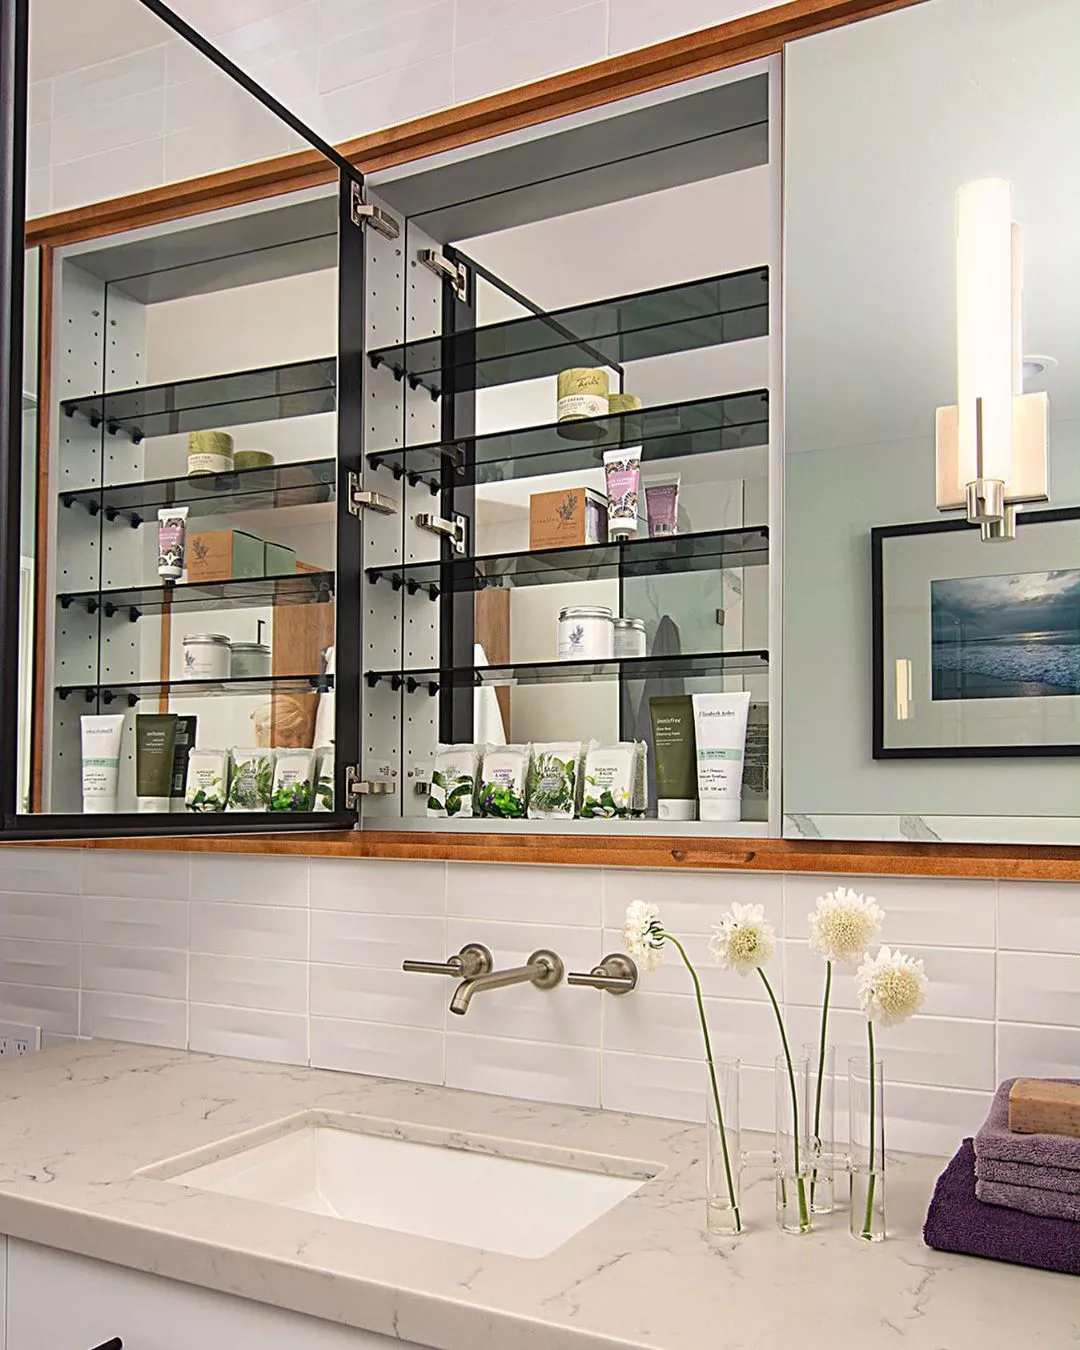 DIY Bathroom Storage Cabinet  Small bathroom storage, Bathroom mirror  storage, Bathroom mirrors diy